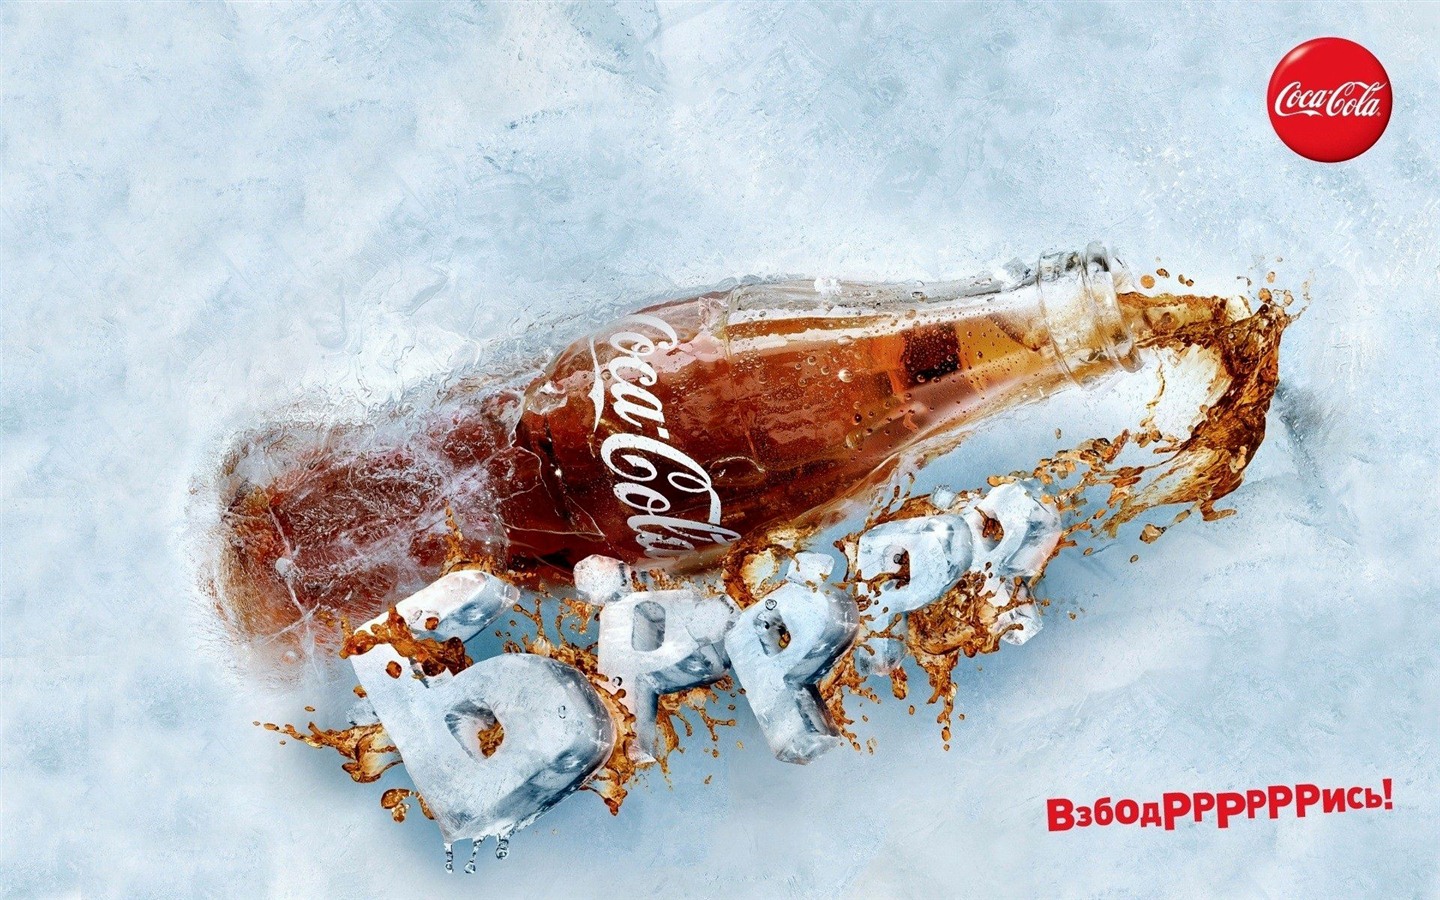 Coca-Cola 可口可樂精美廣告壁紙 #8 - 1440x900